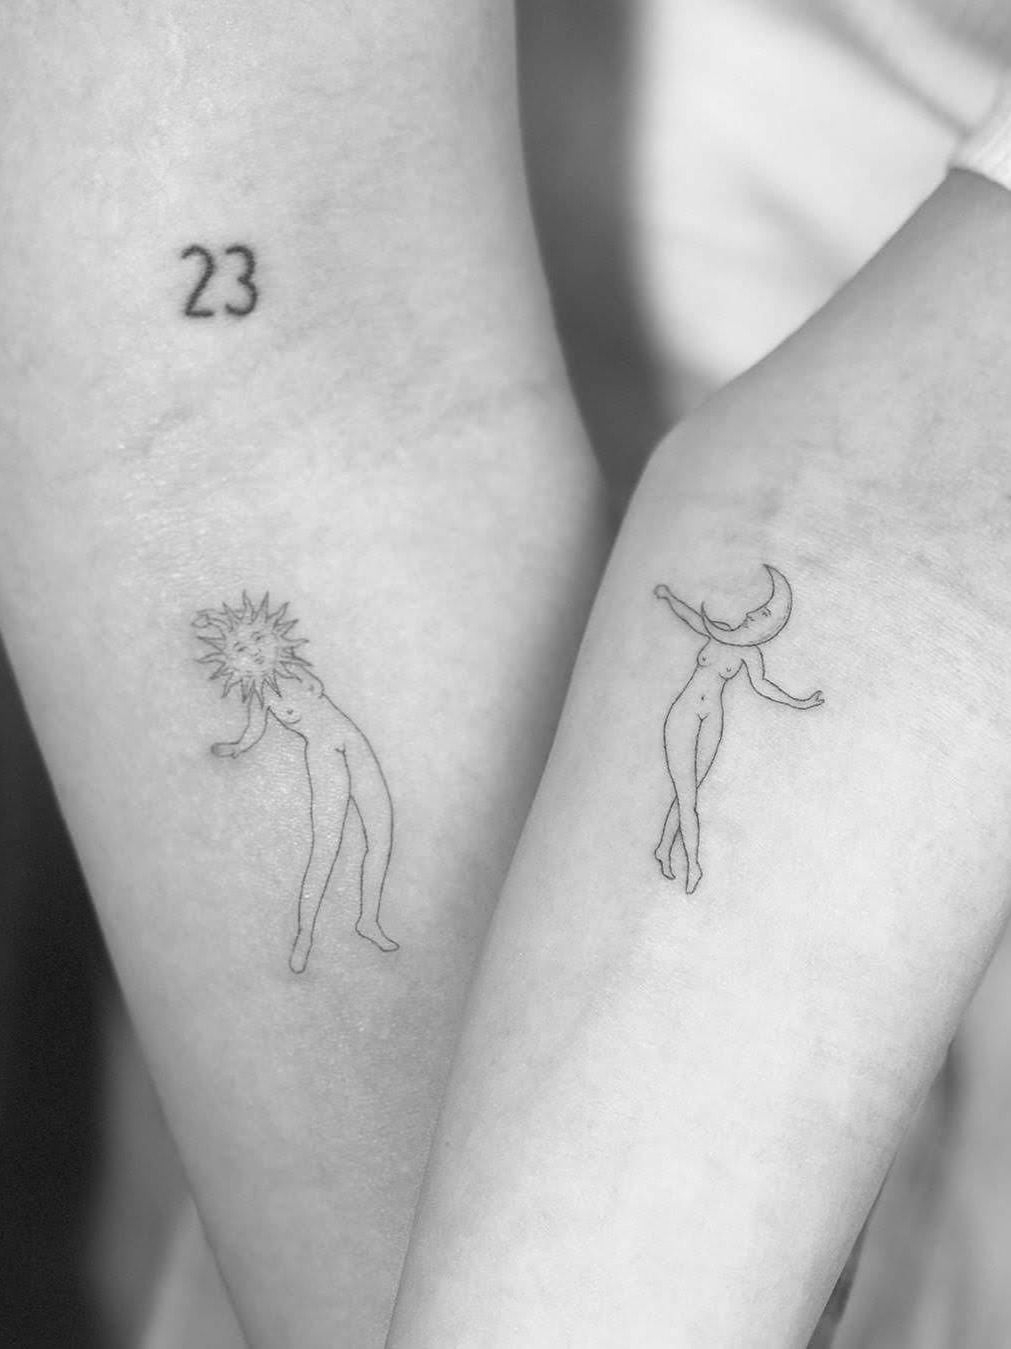 Squiggle tattoo  Tattoos Tattoos and piercings Geometric tattoo